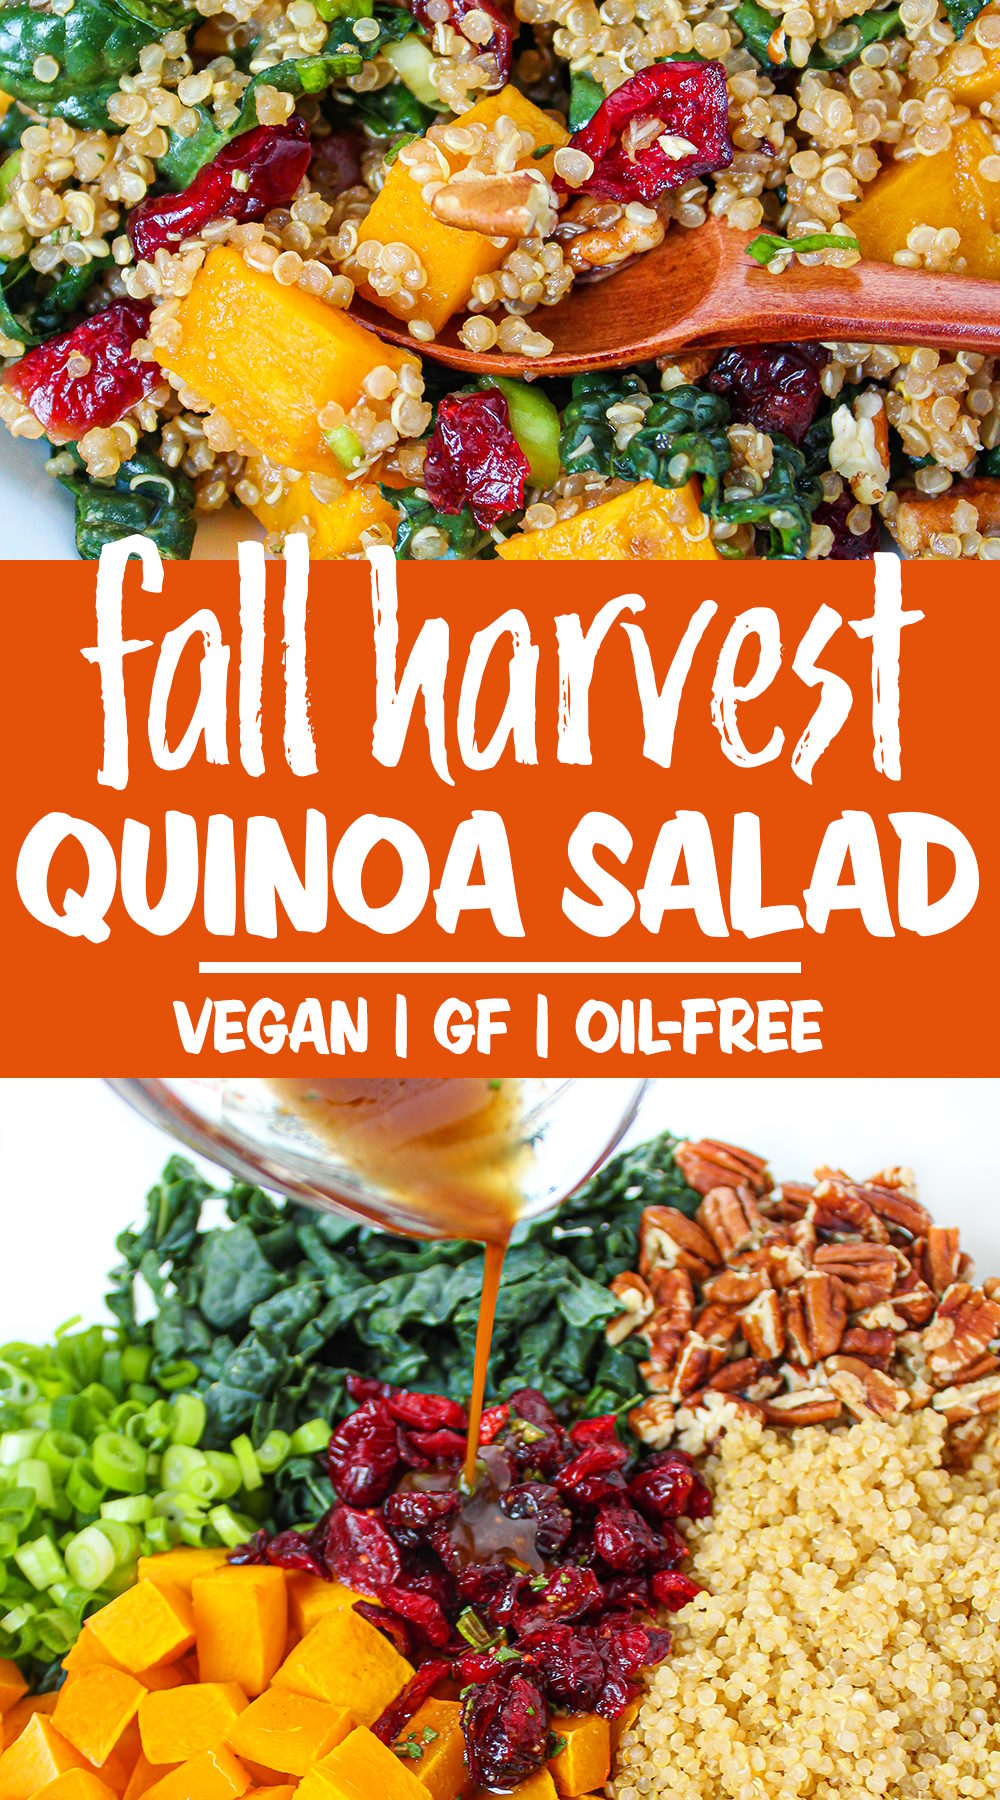 Fall Harvest Quinoa Salad (Vegan!) - The Garden Grazer